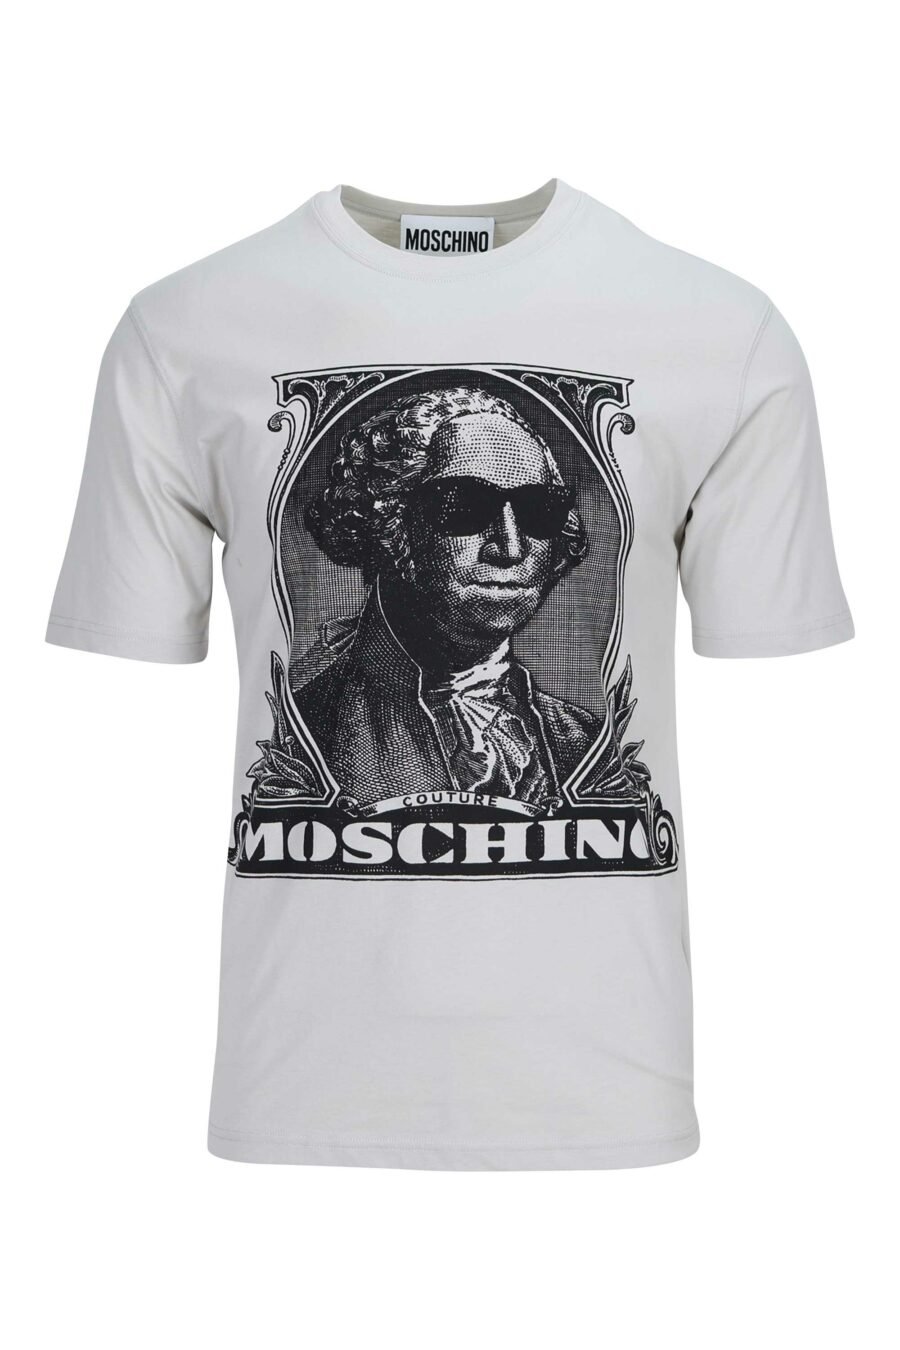 T-shirt grey with maxilogo "Moschino" ticket - 889316954807